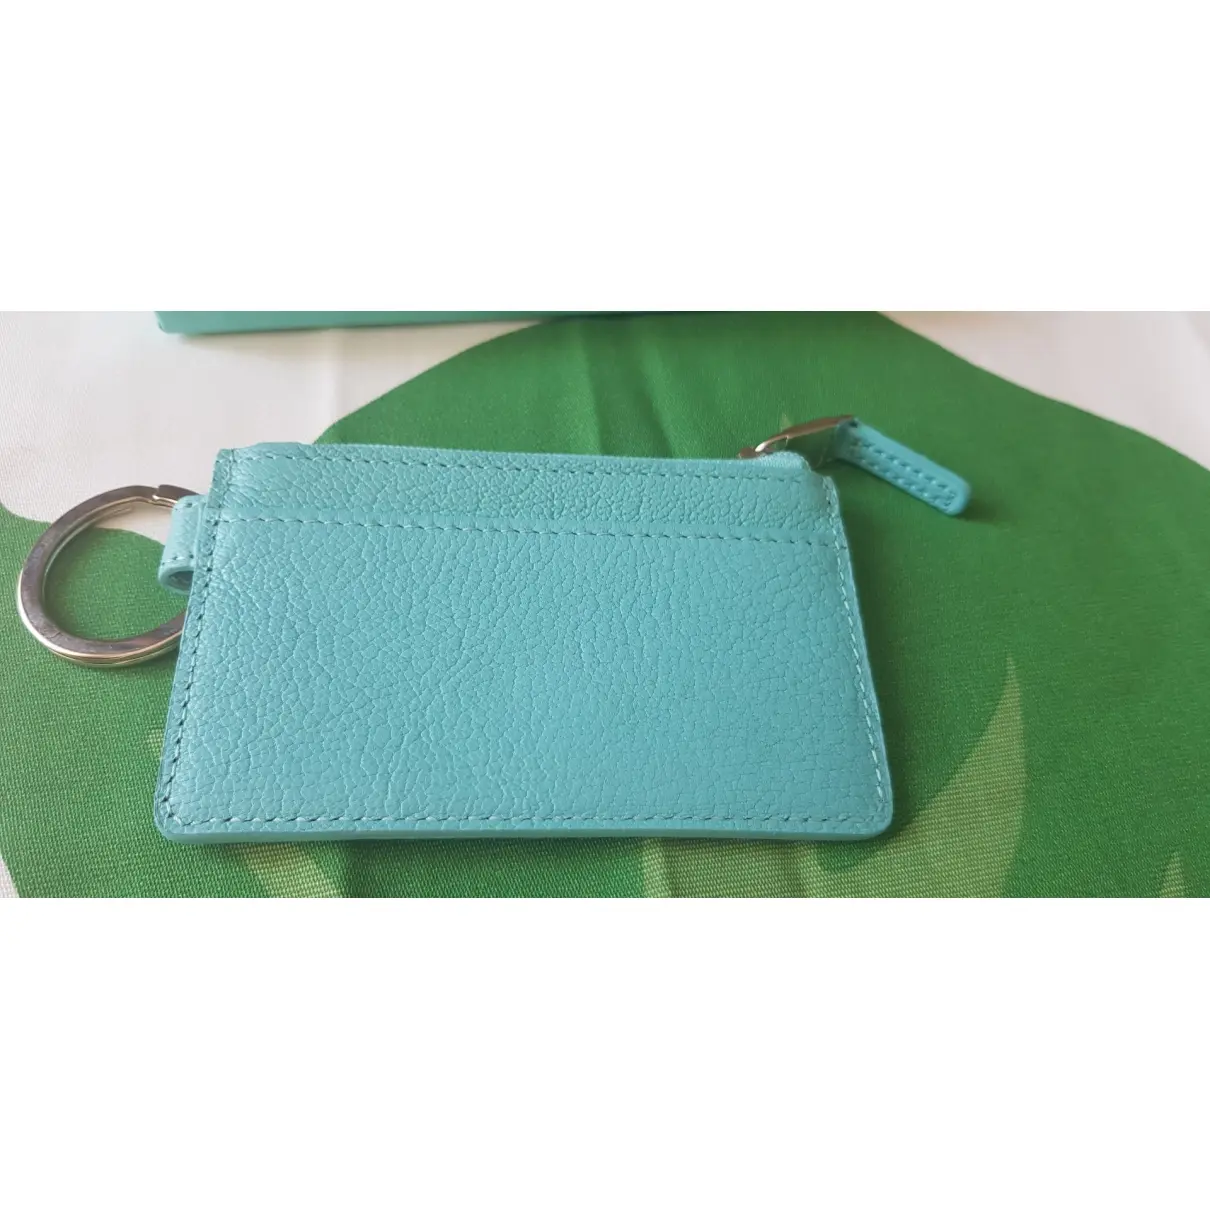 Buy Tiffany & Co Leather key ring online